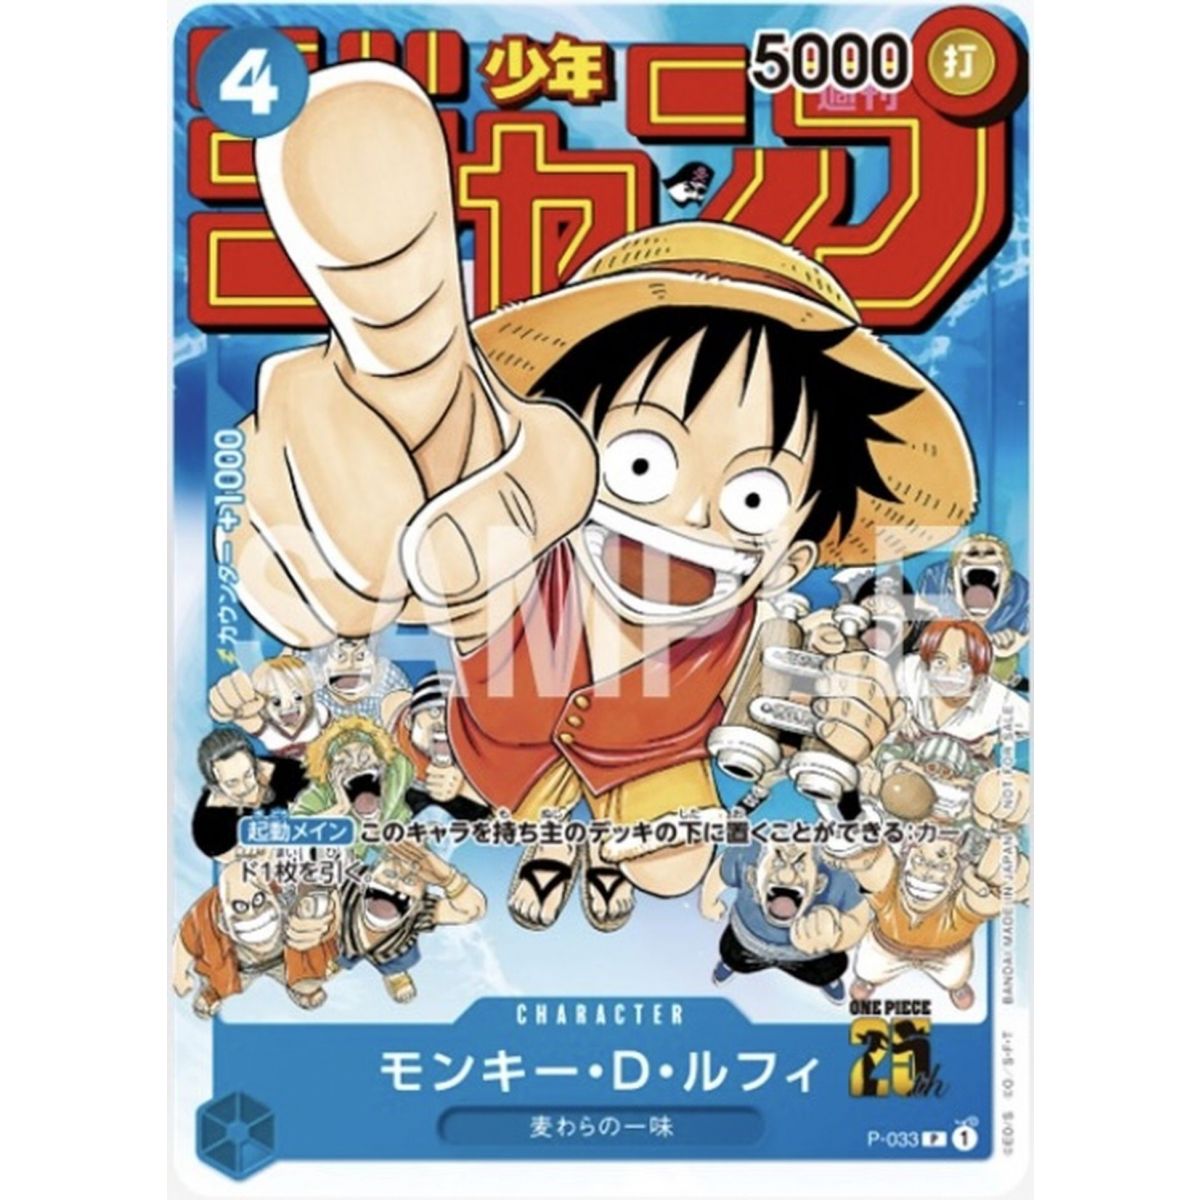 One Piece - Promo - Monkey D. Luffy P-033 - Saikyo Jump Promo - JP